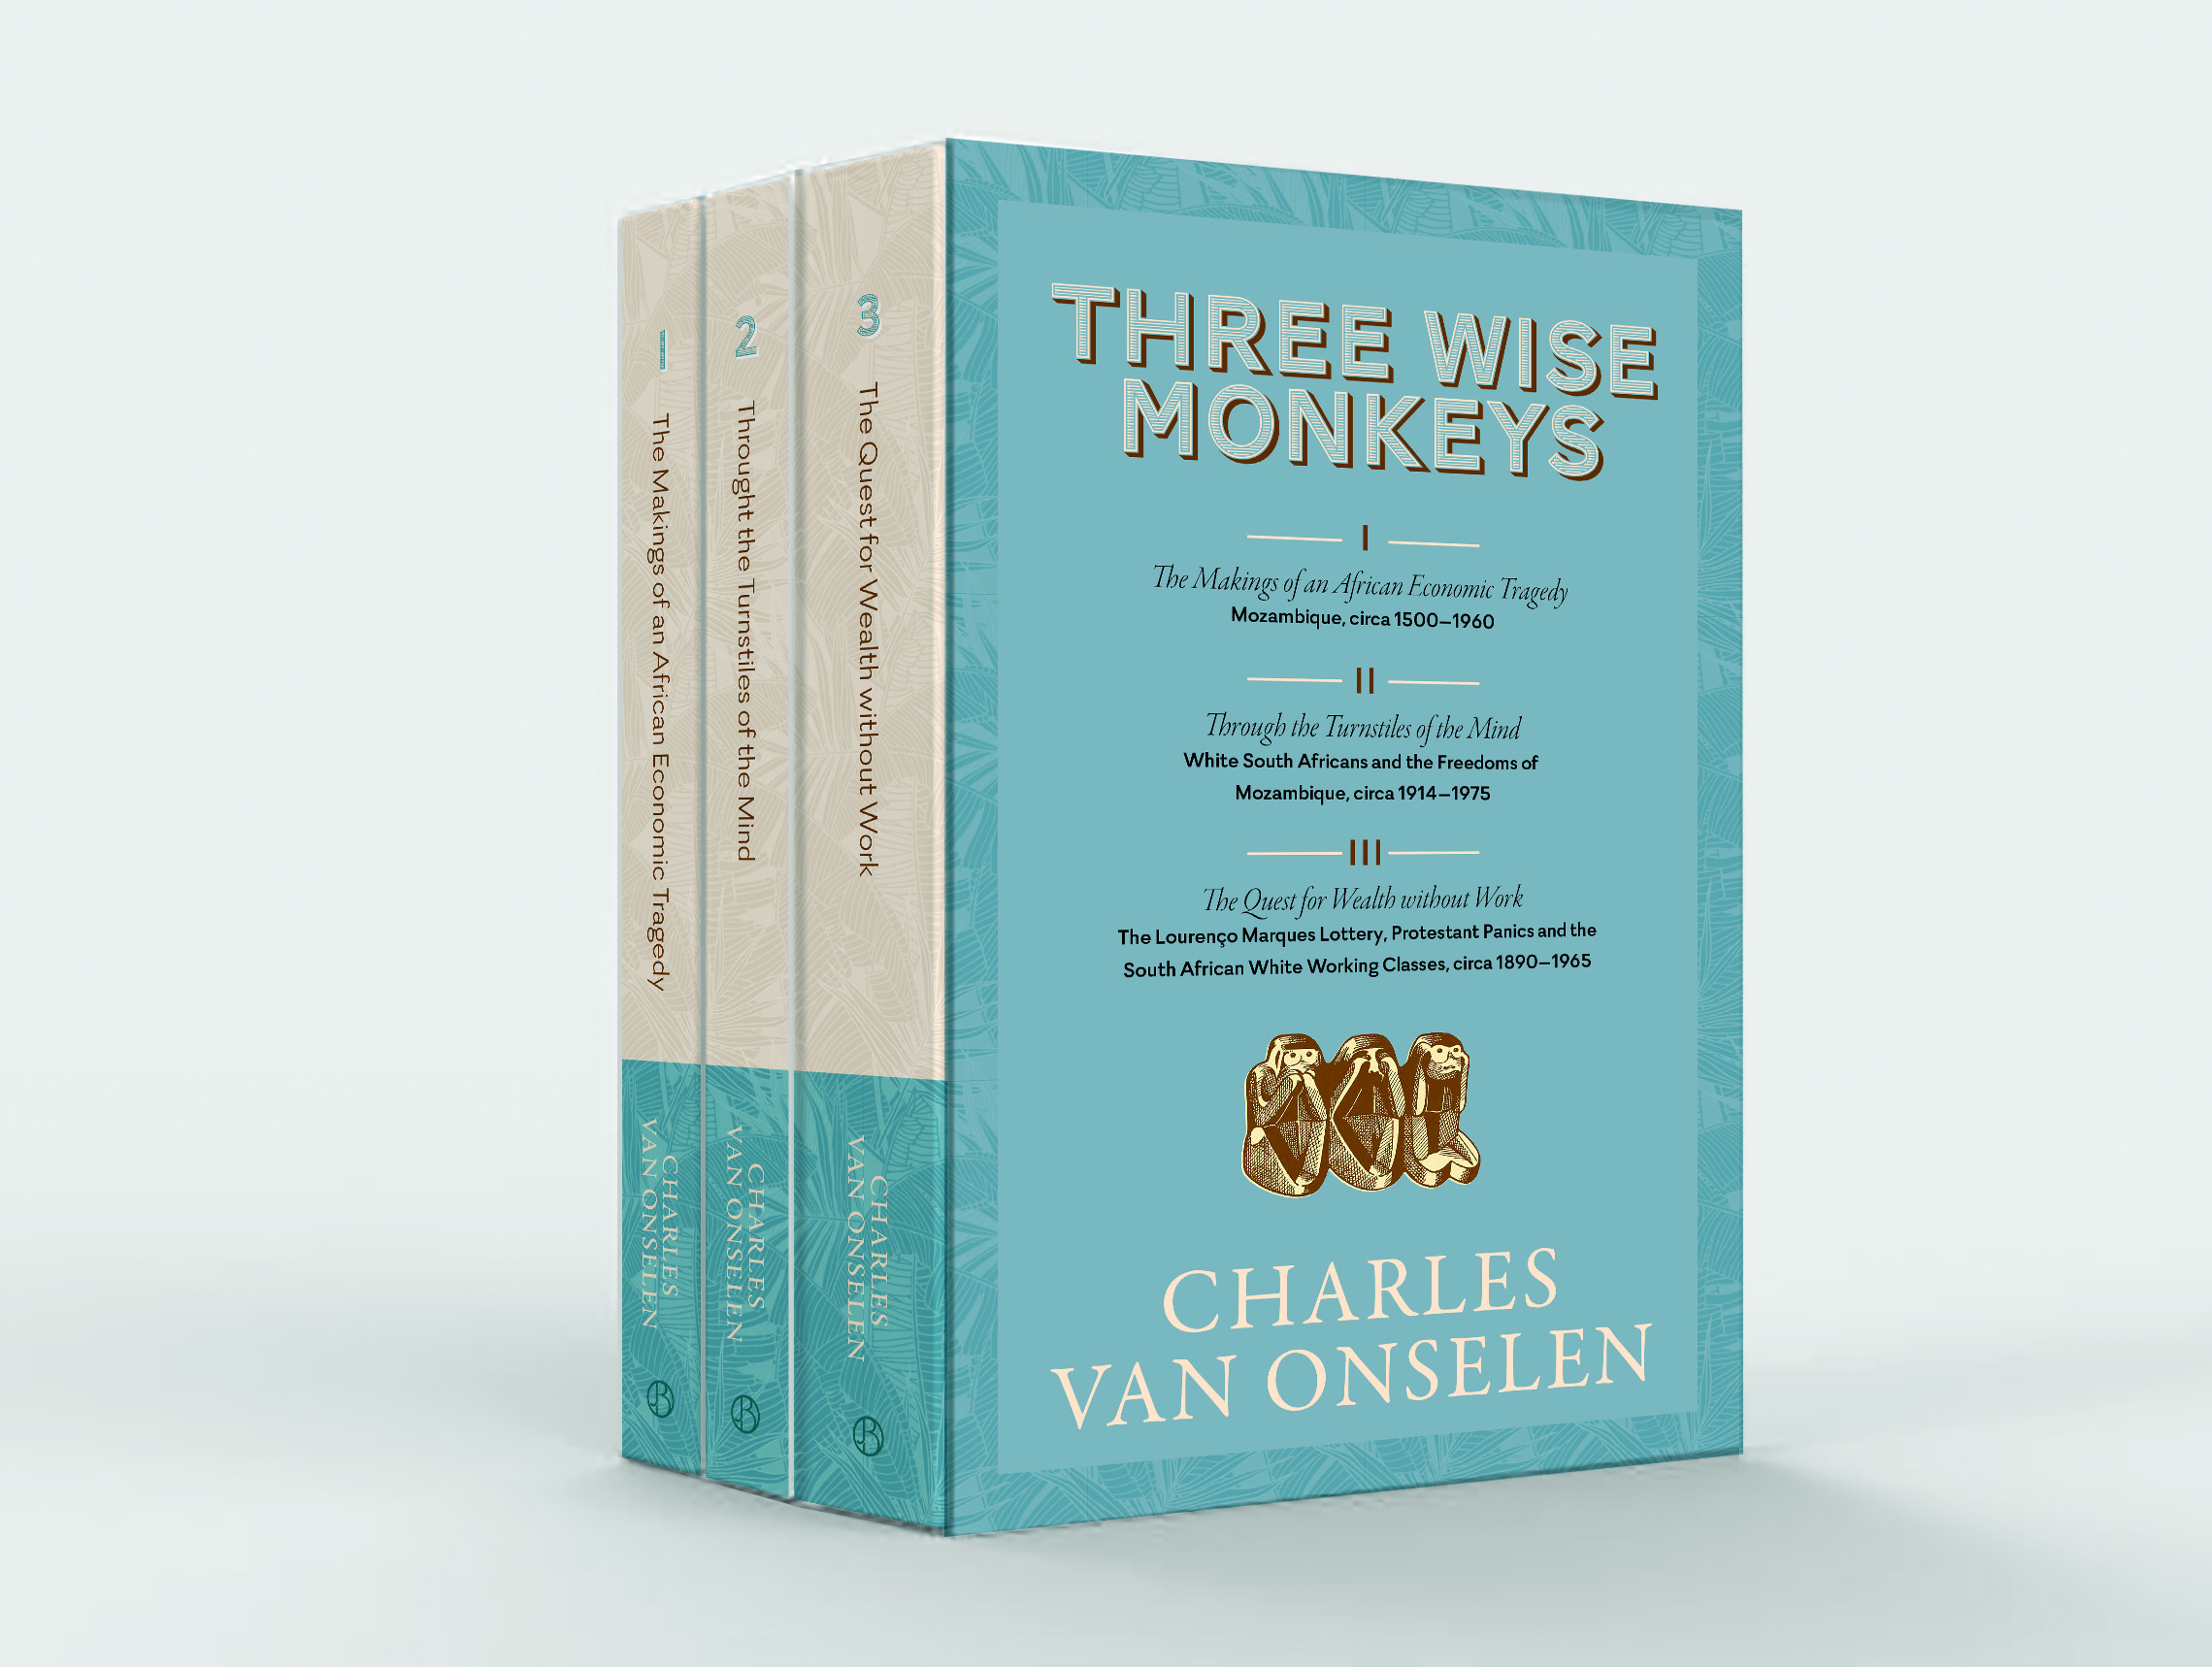 Three Wise Monkeys : a box set with three volumes